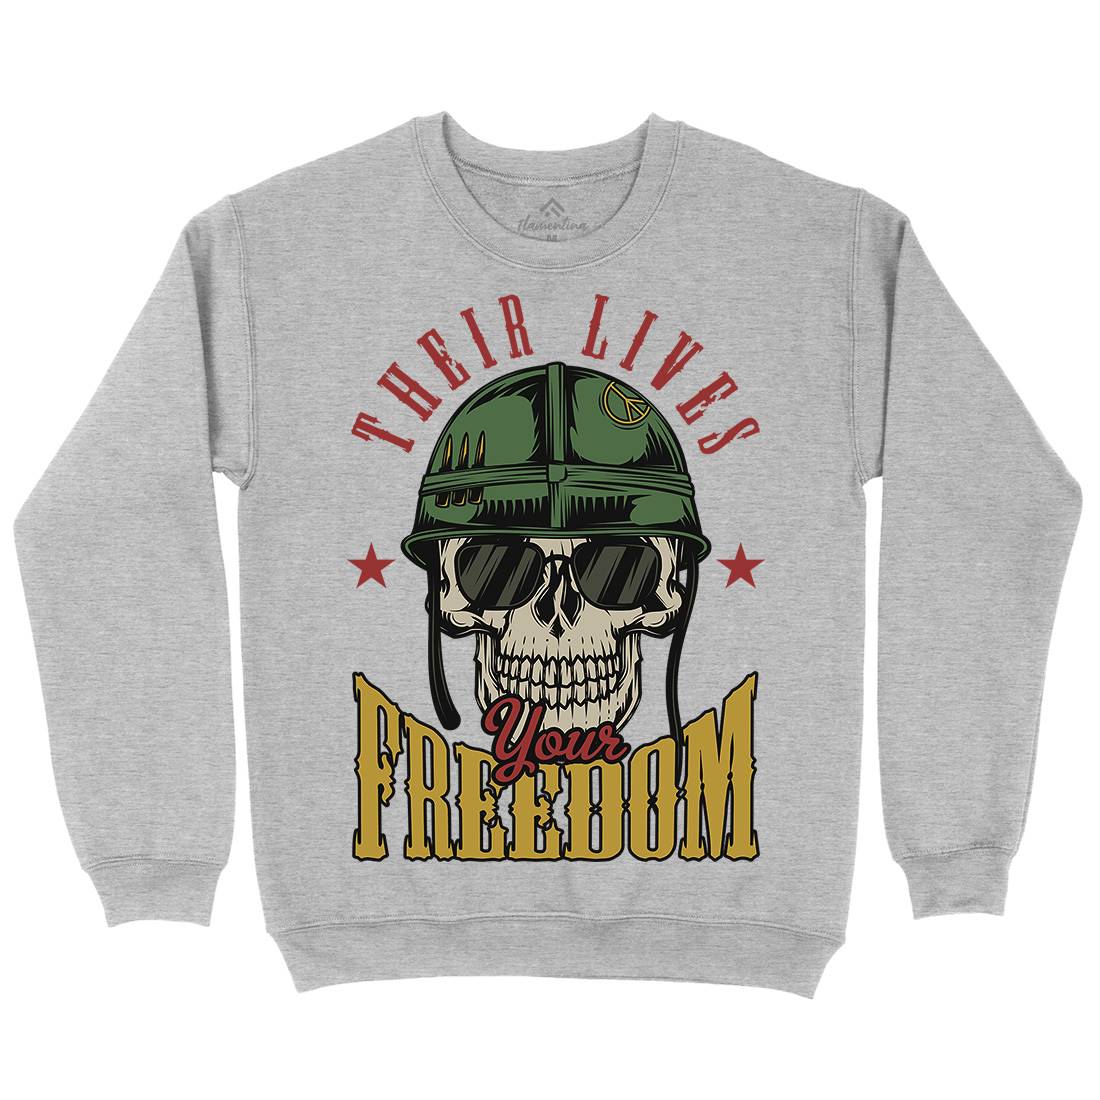 Your Freedom Mens Crew Neck Sweatshirt Army C899